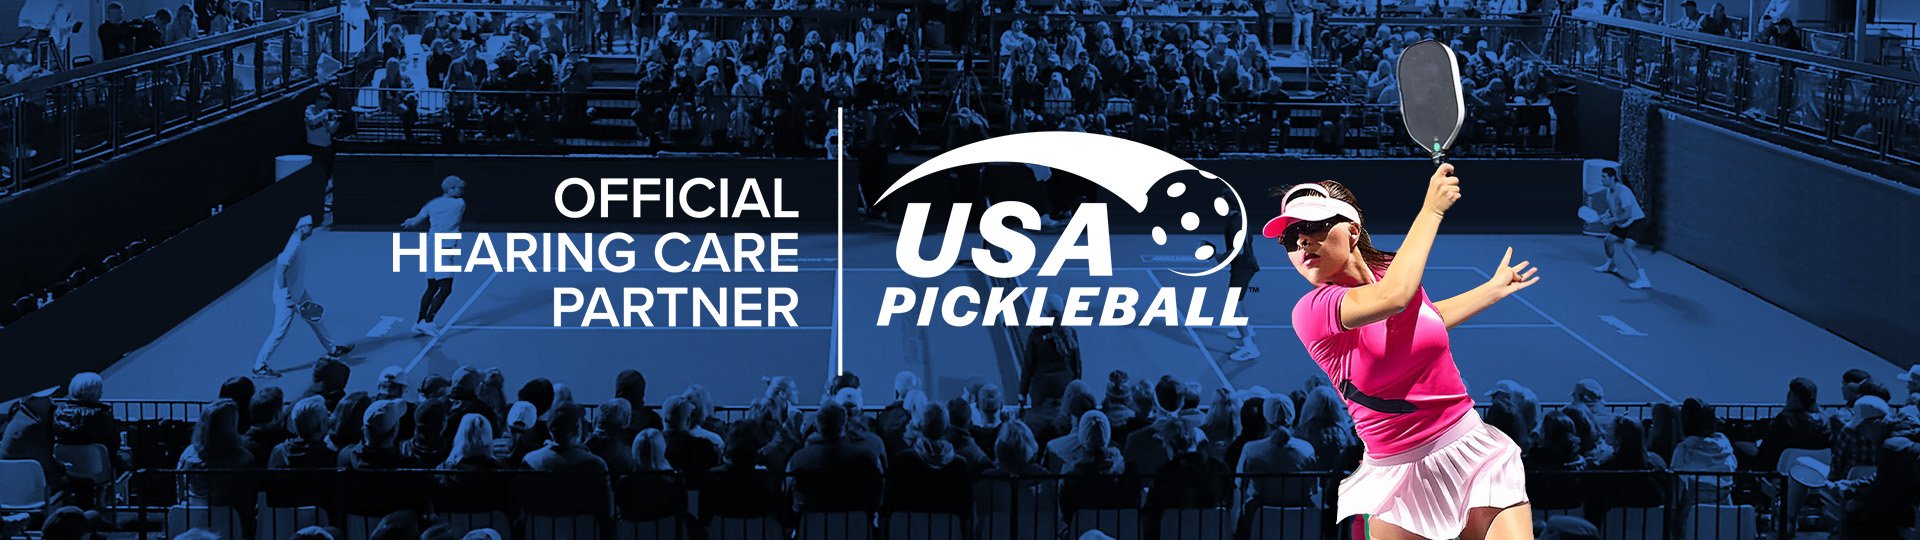 Official Hearing Care Sponsor of USA Pickleball!